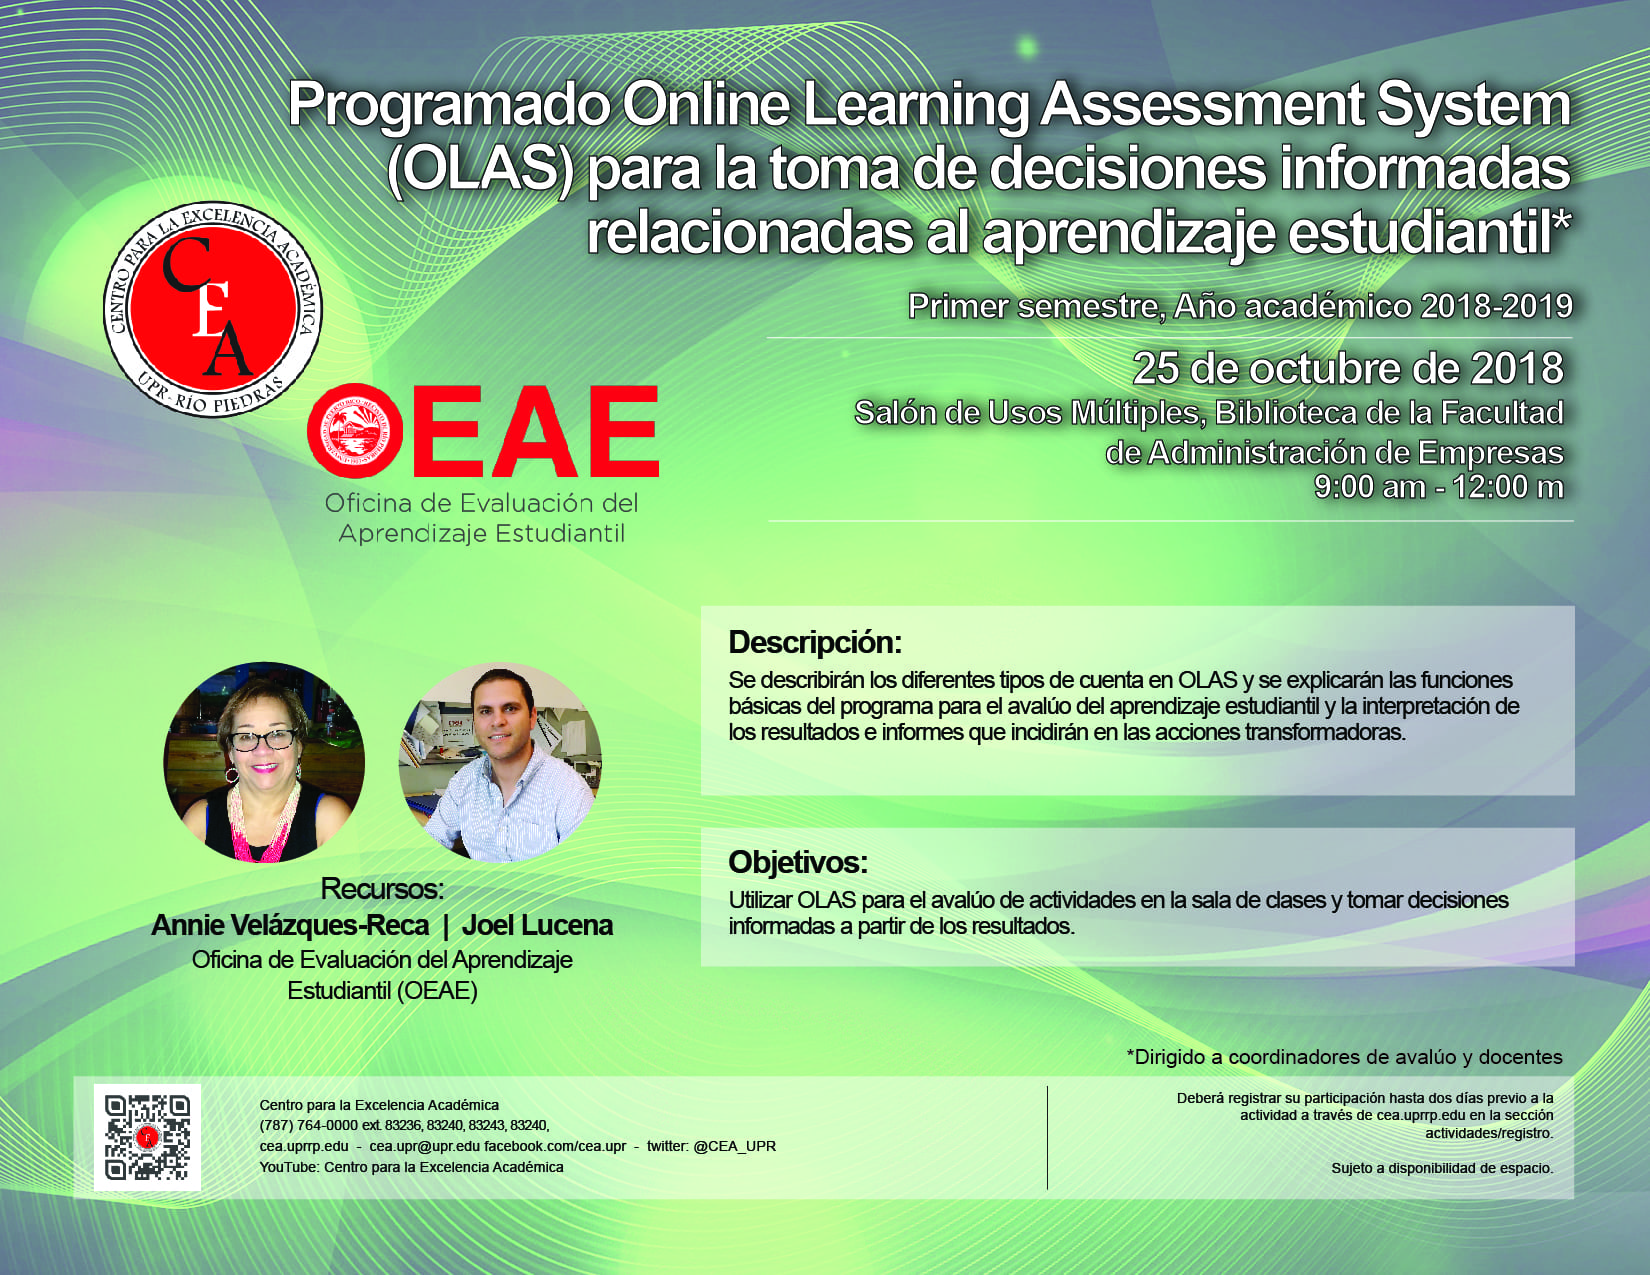 Taller: OLAS (Online Learning Assessment System) para la toma de decisiones informadas - 25 octubre 2018 - FAE 9am a 12m